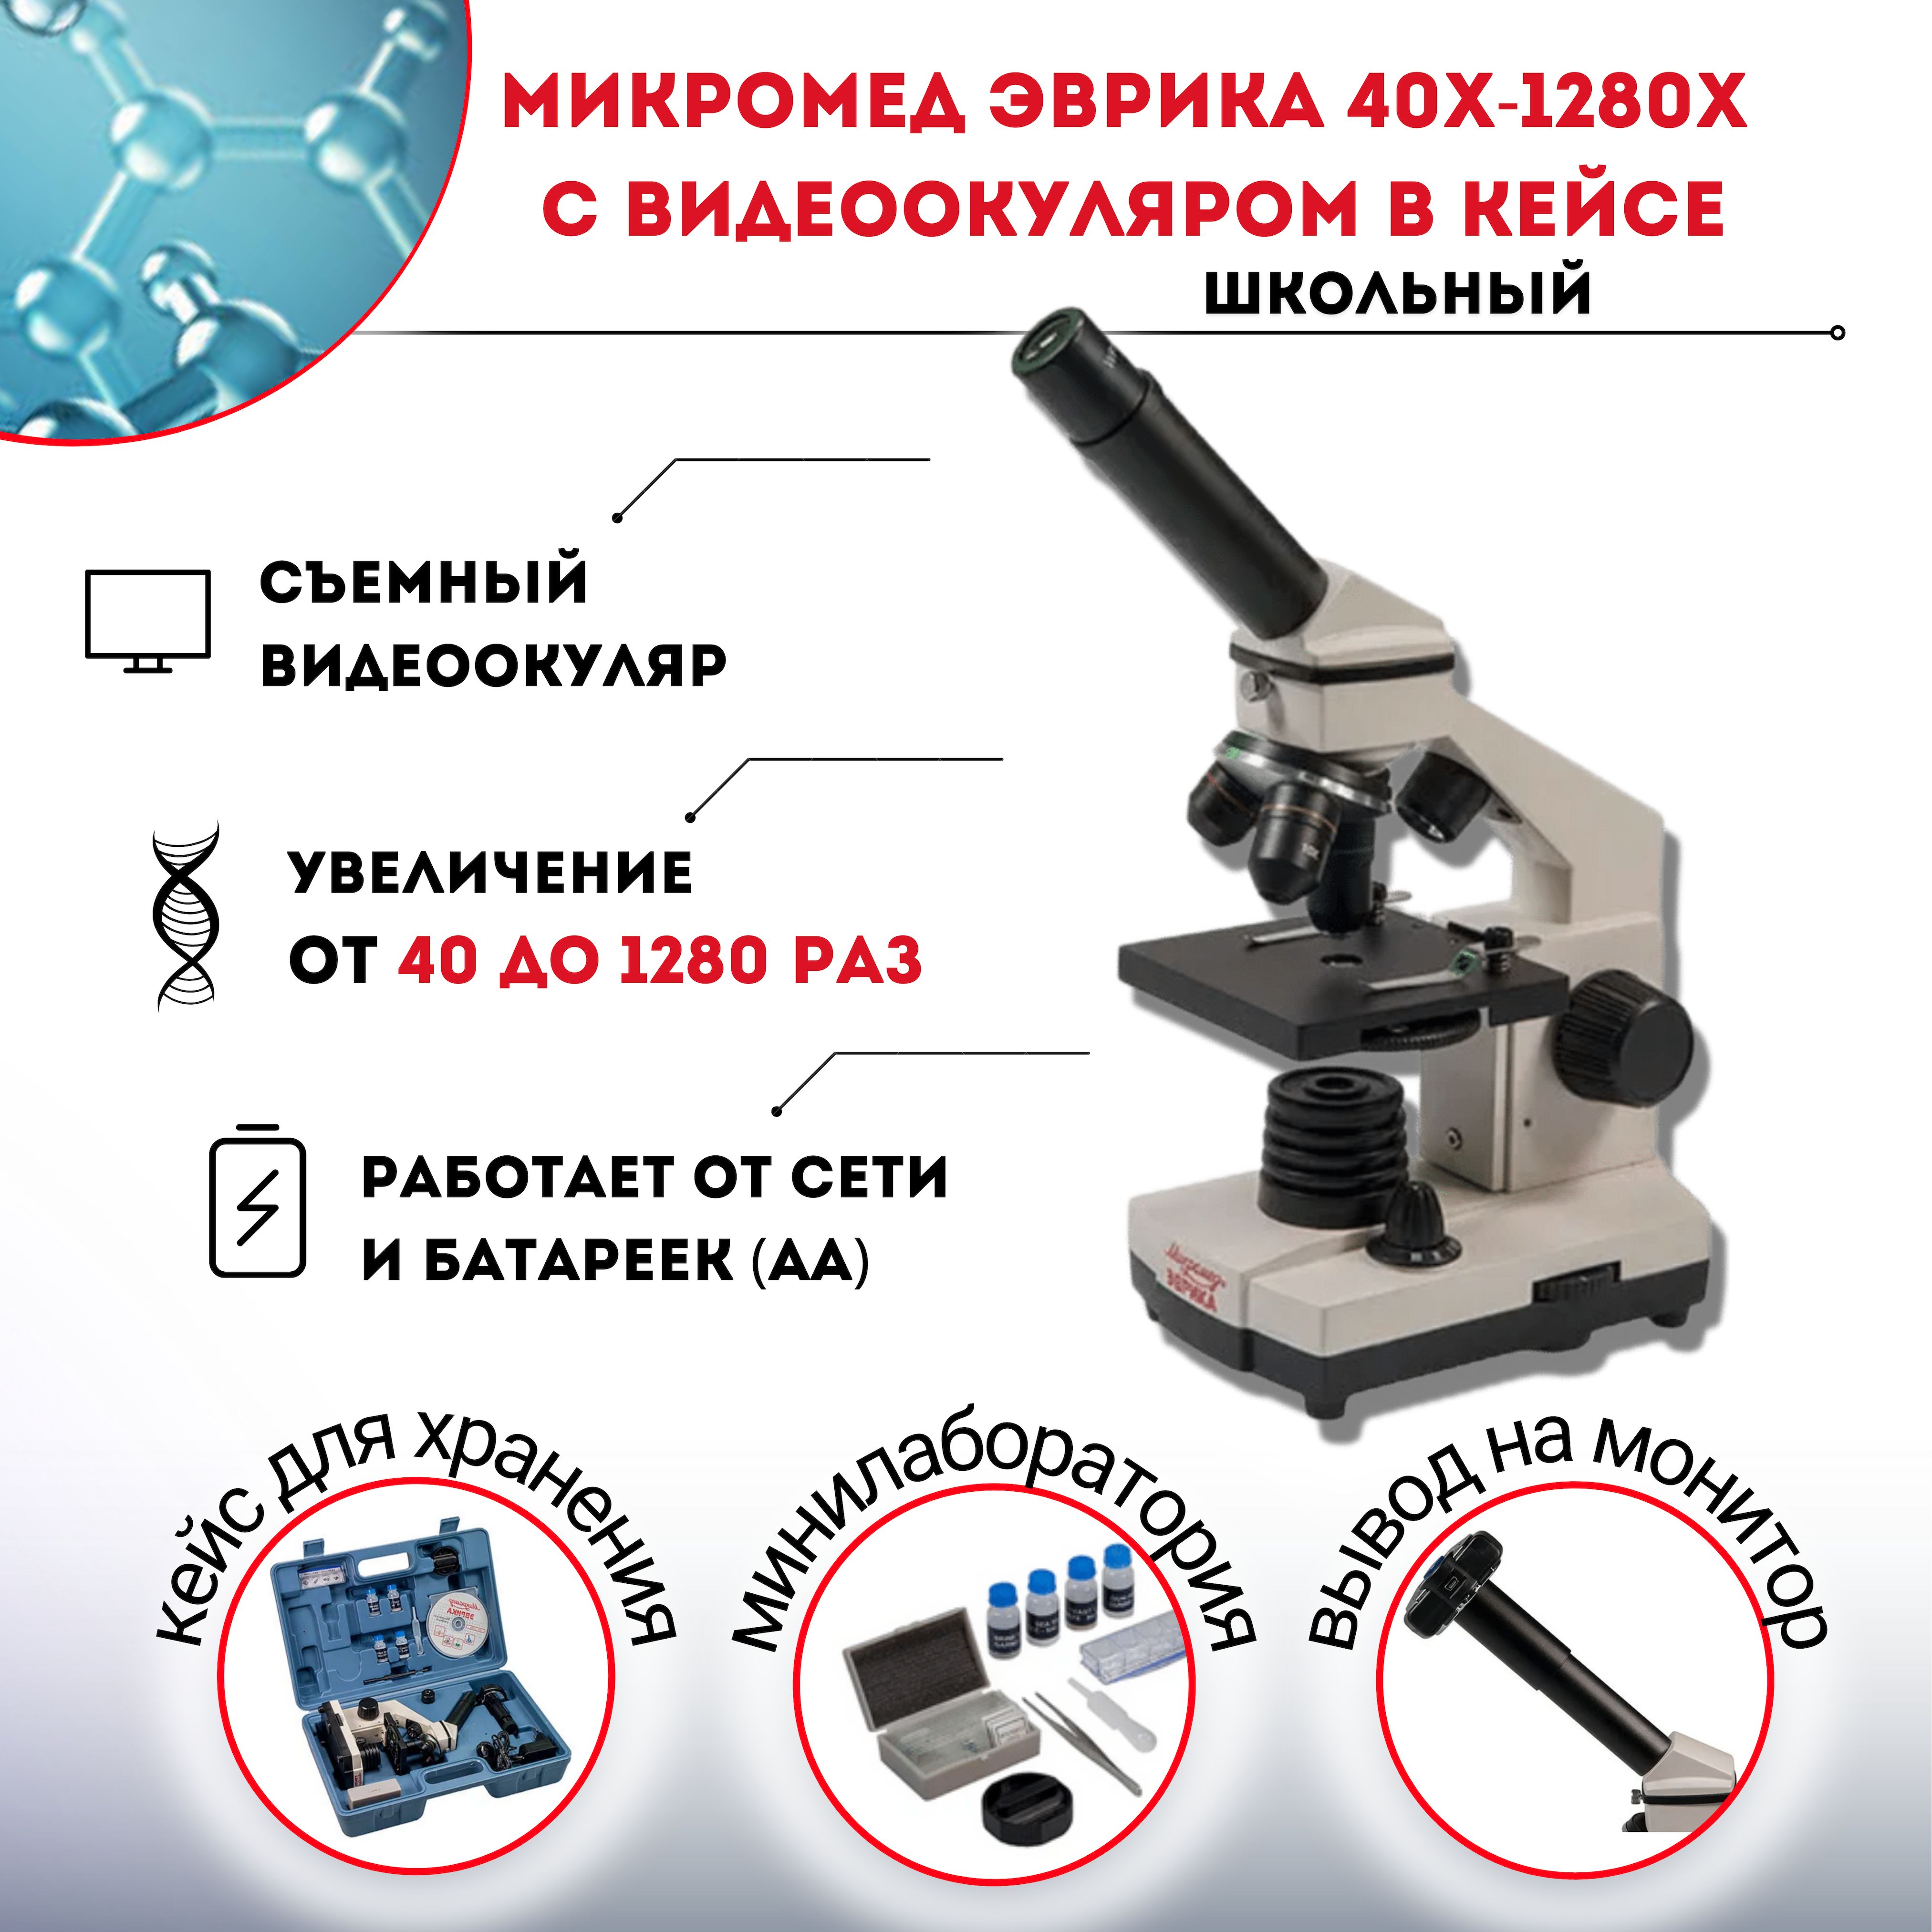 Микромед эврика 1280х. Микроскоп школьный Микромед Эврика 40x32ox. Микромед Эврика 40х-1280х микровинт. Микромед микроскоп школьный набор с фотокамерой. Как настроить микроскоп.